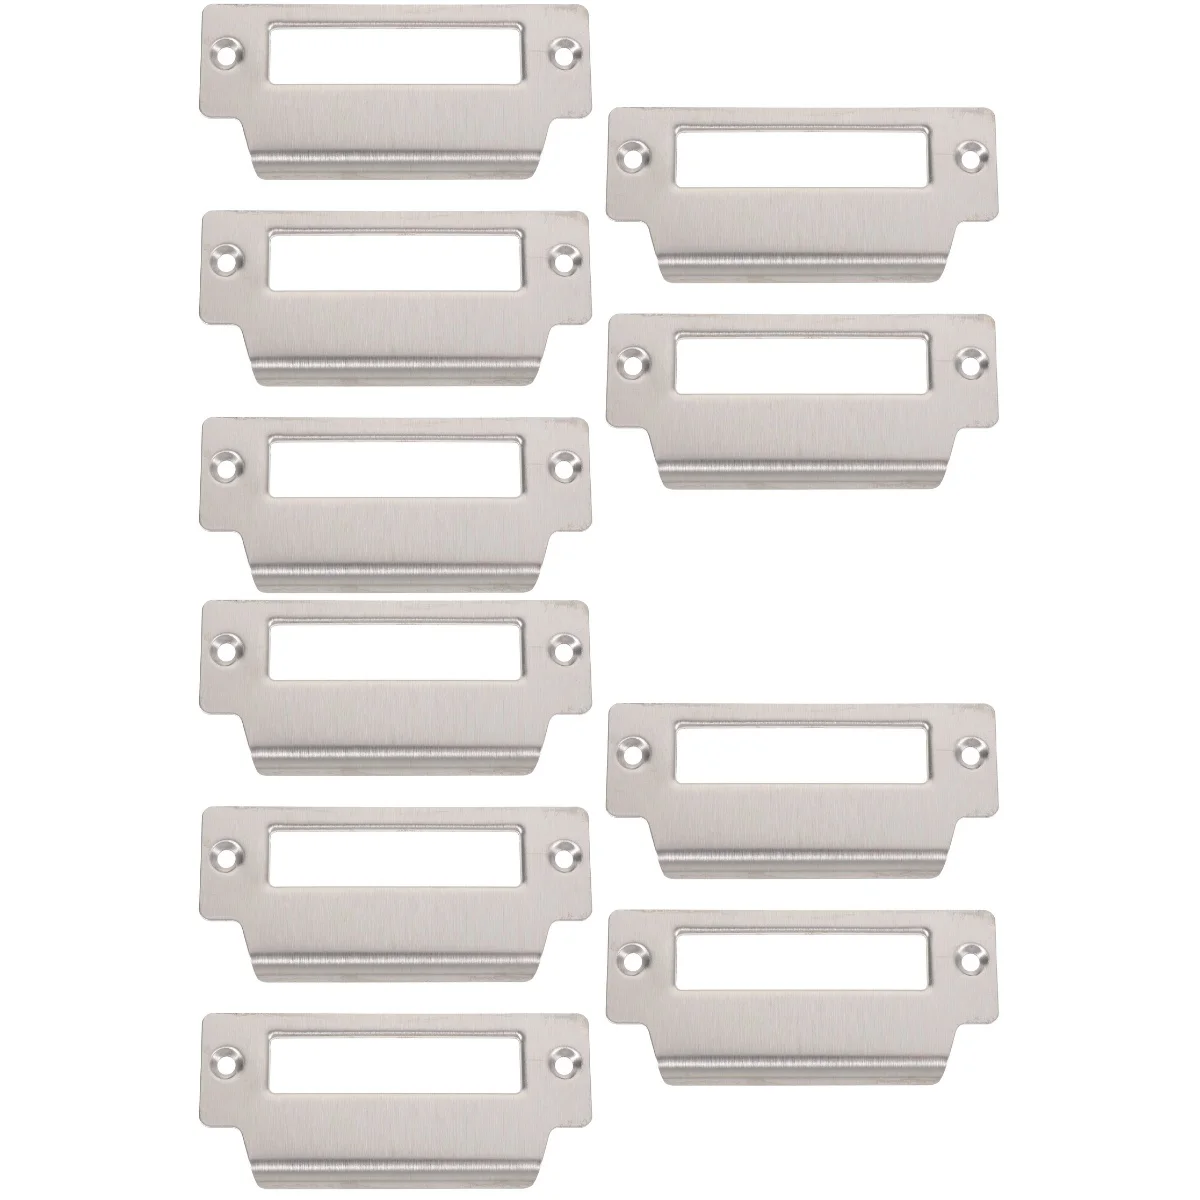 

Strike Door Plate Securitymetal Lock Guard Filler Standard Reinforcementdevice Backplate Kit Plates Doors Stainless Steel Travel